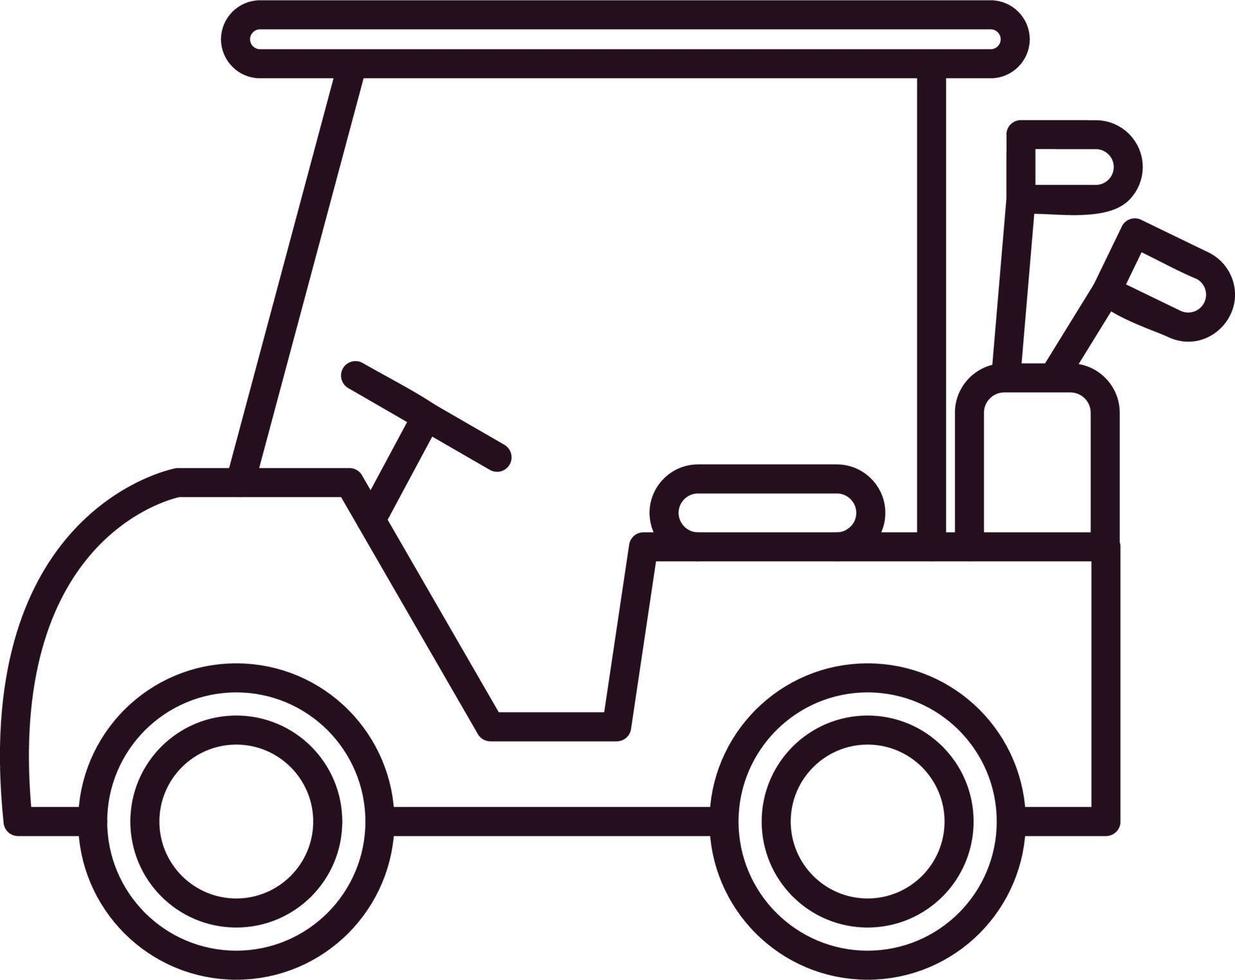 golf vagn vektor ikon